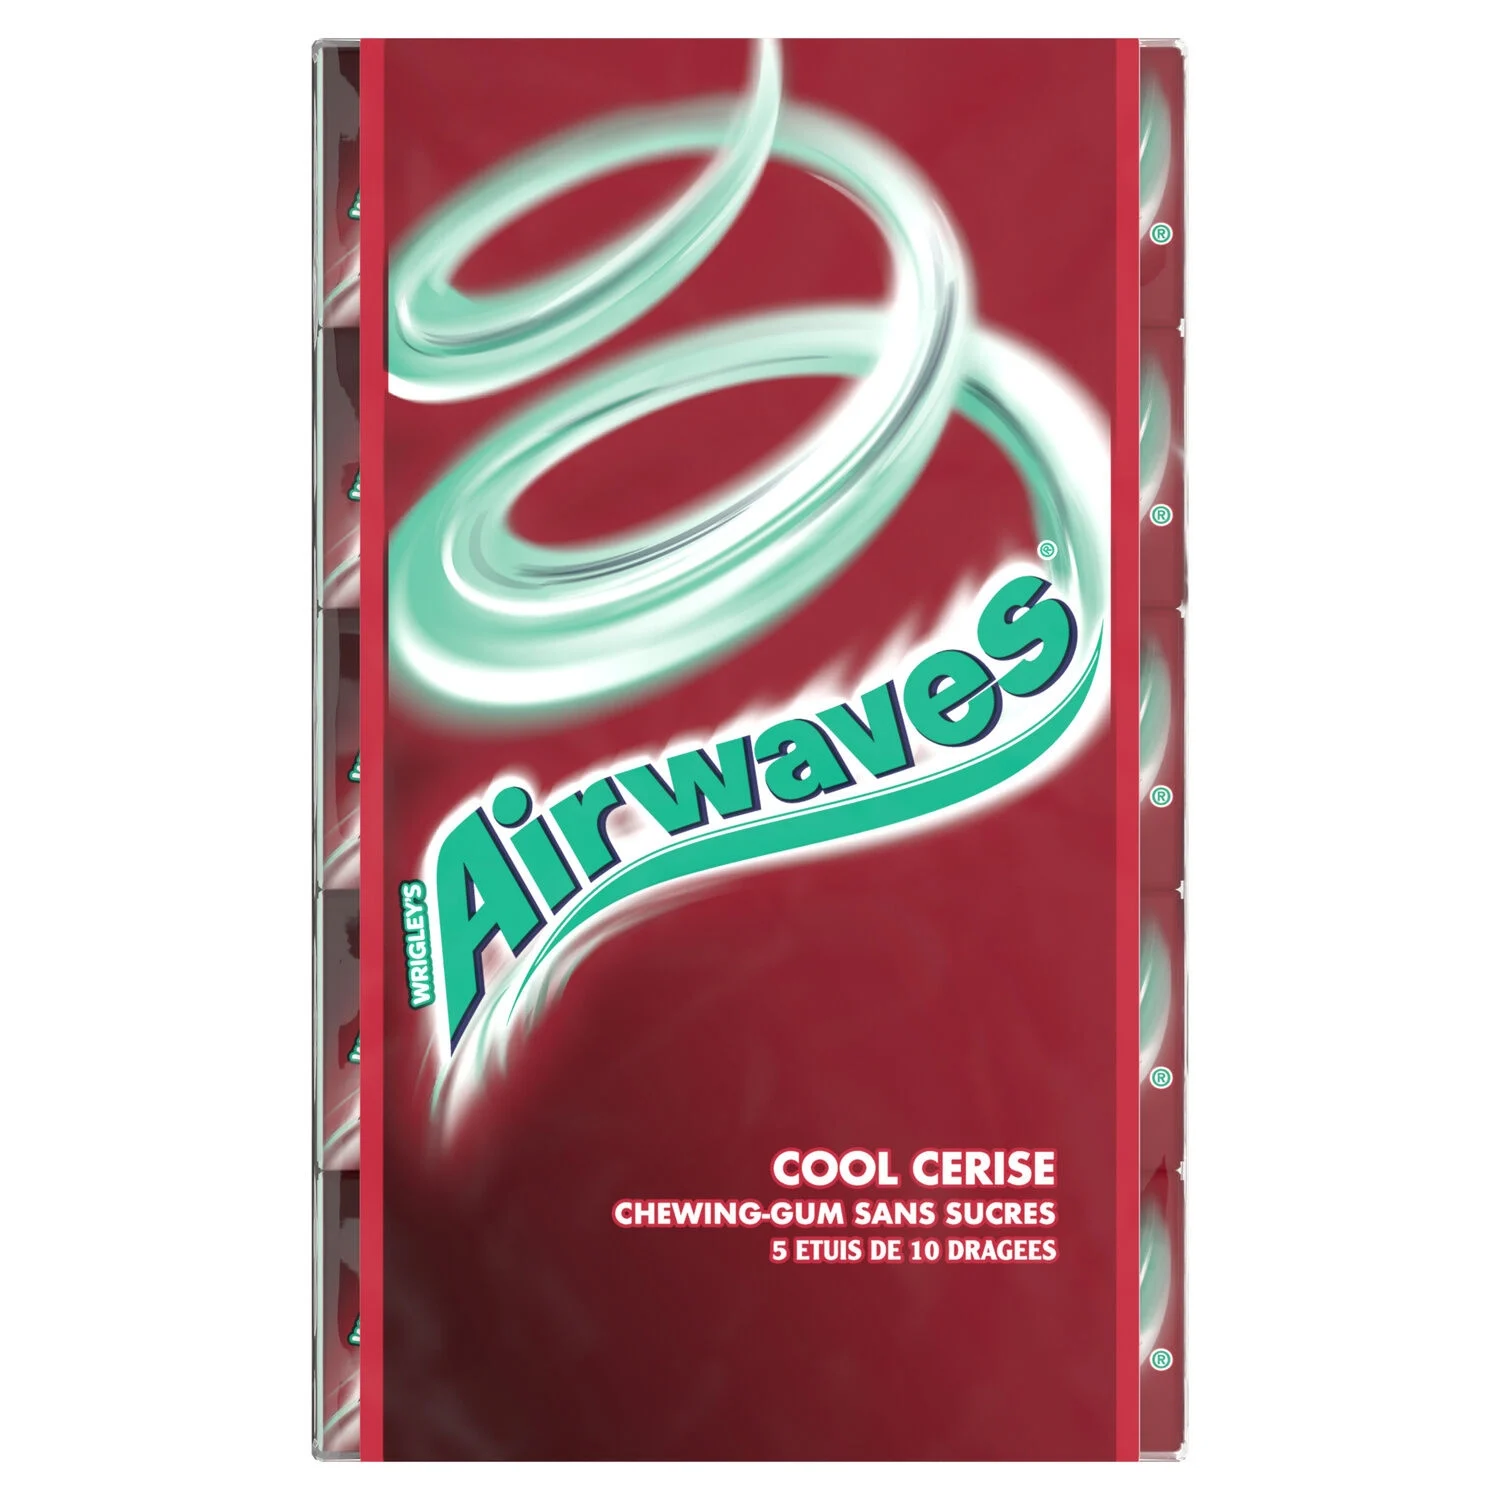 Airwaves Cool Cerise 5x10d 70g